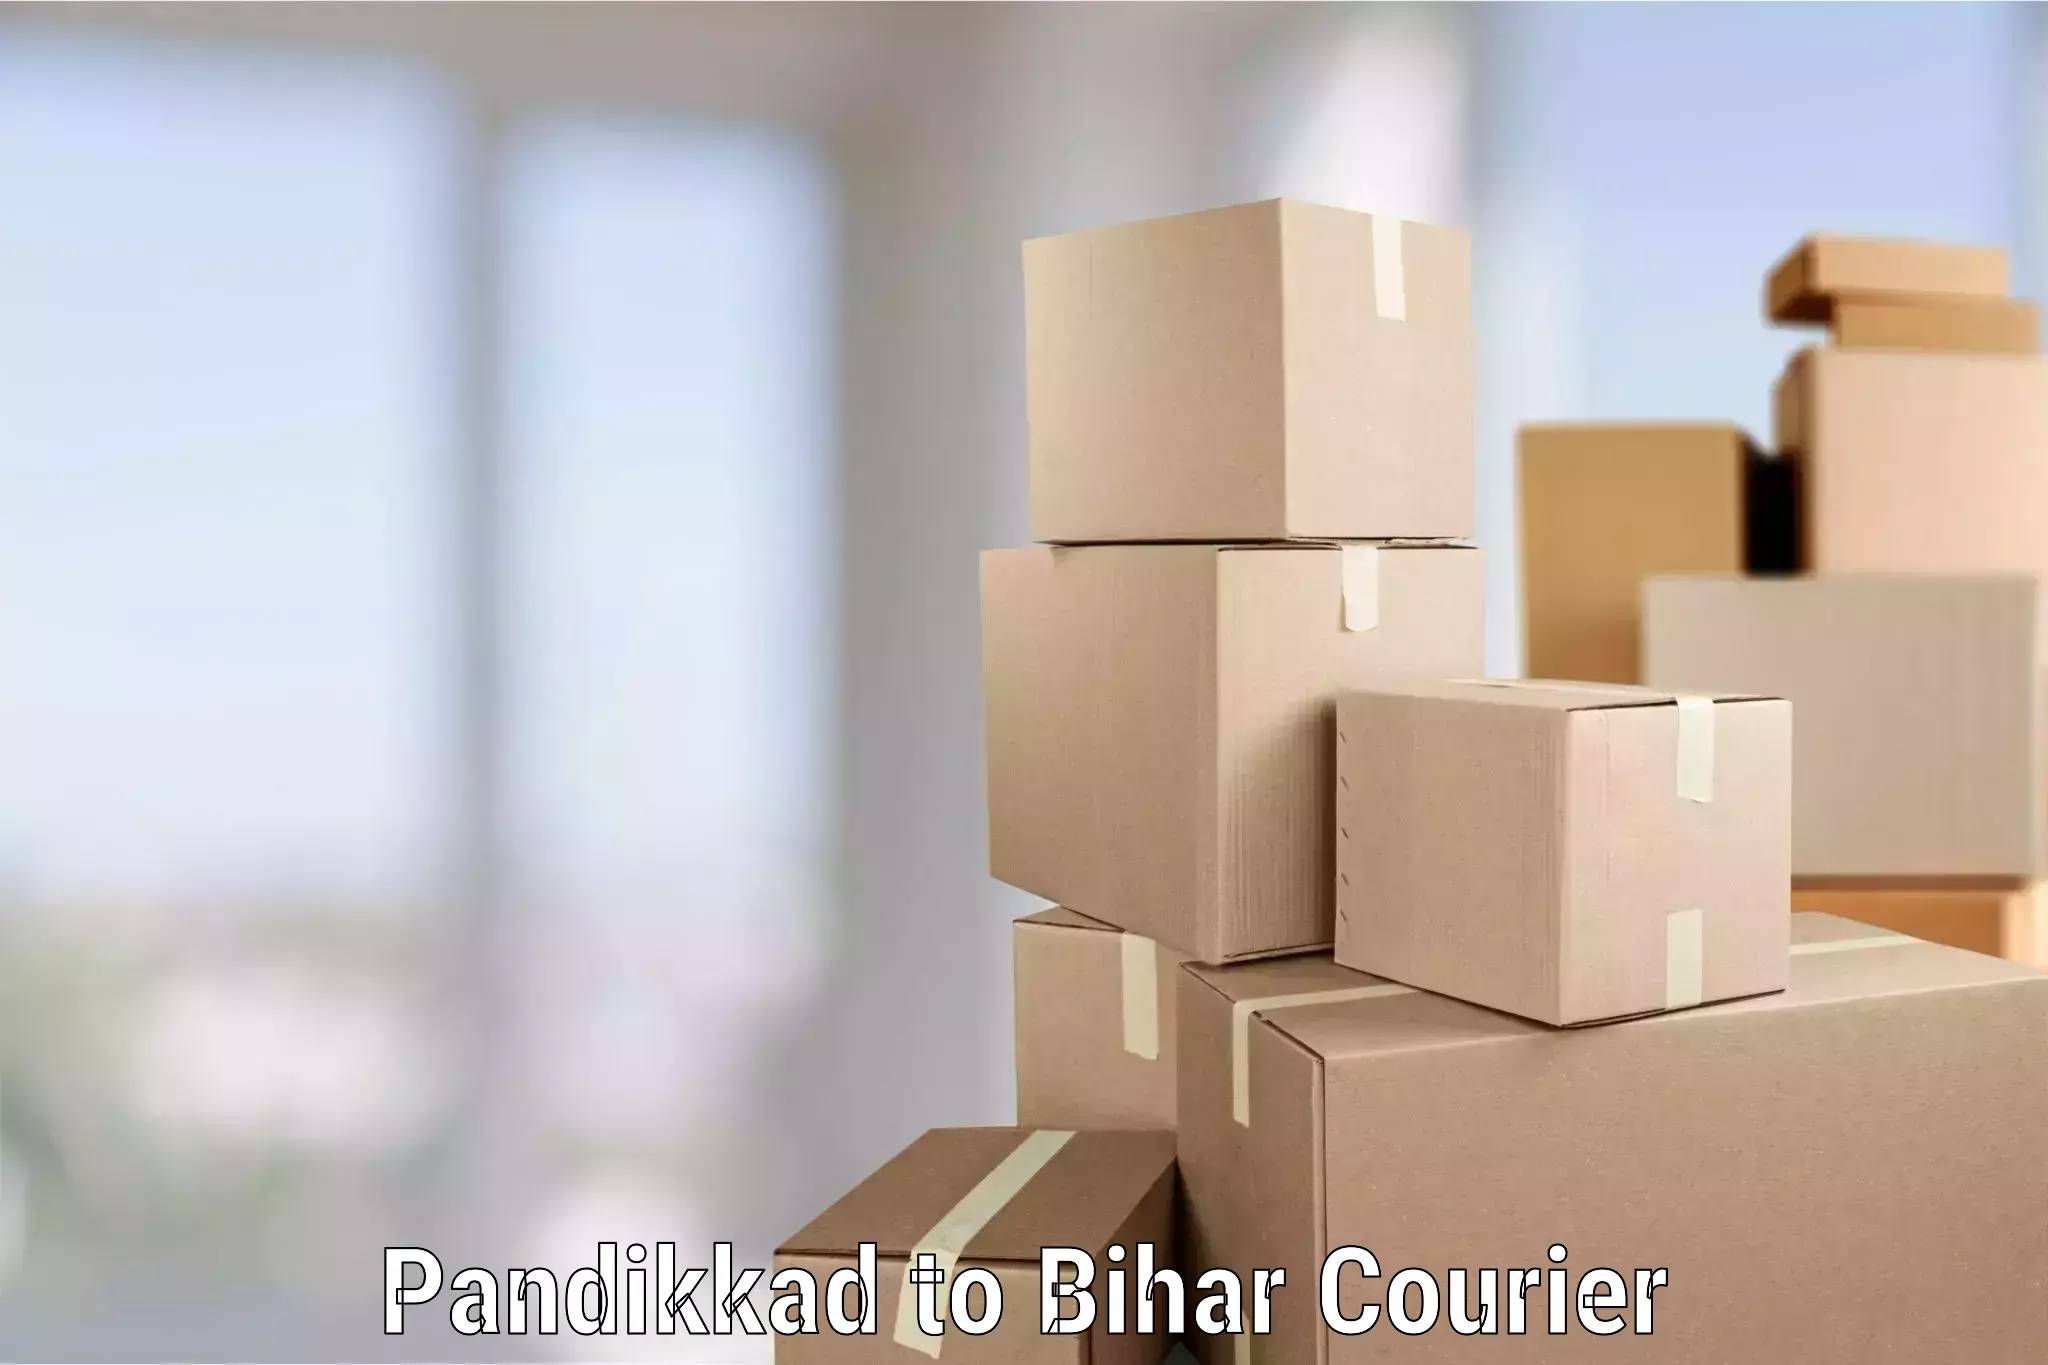 Furniture delivery service Pandikkad to Bihar